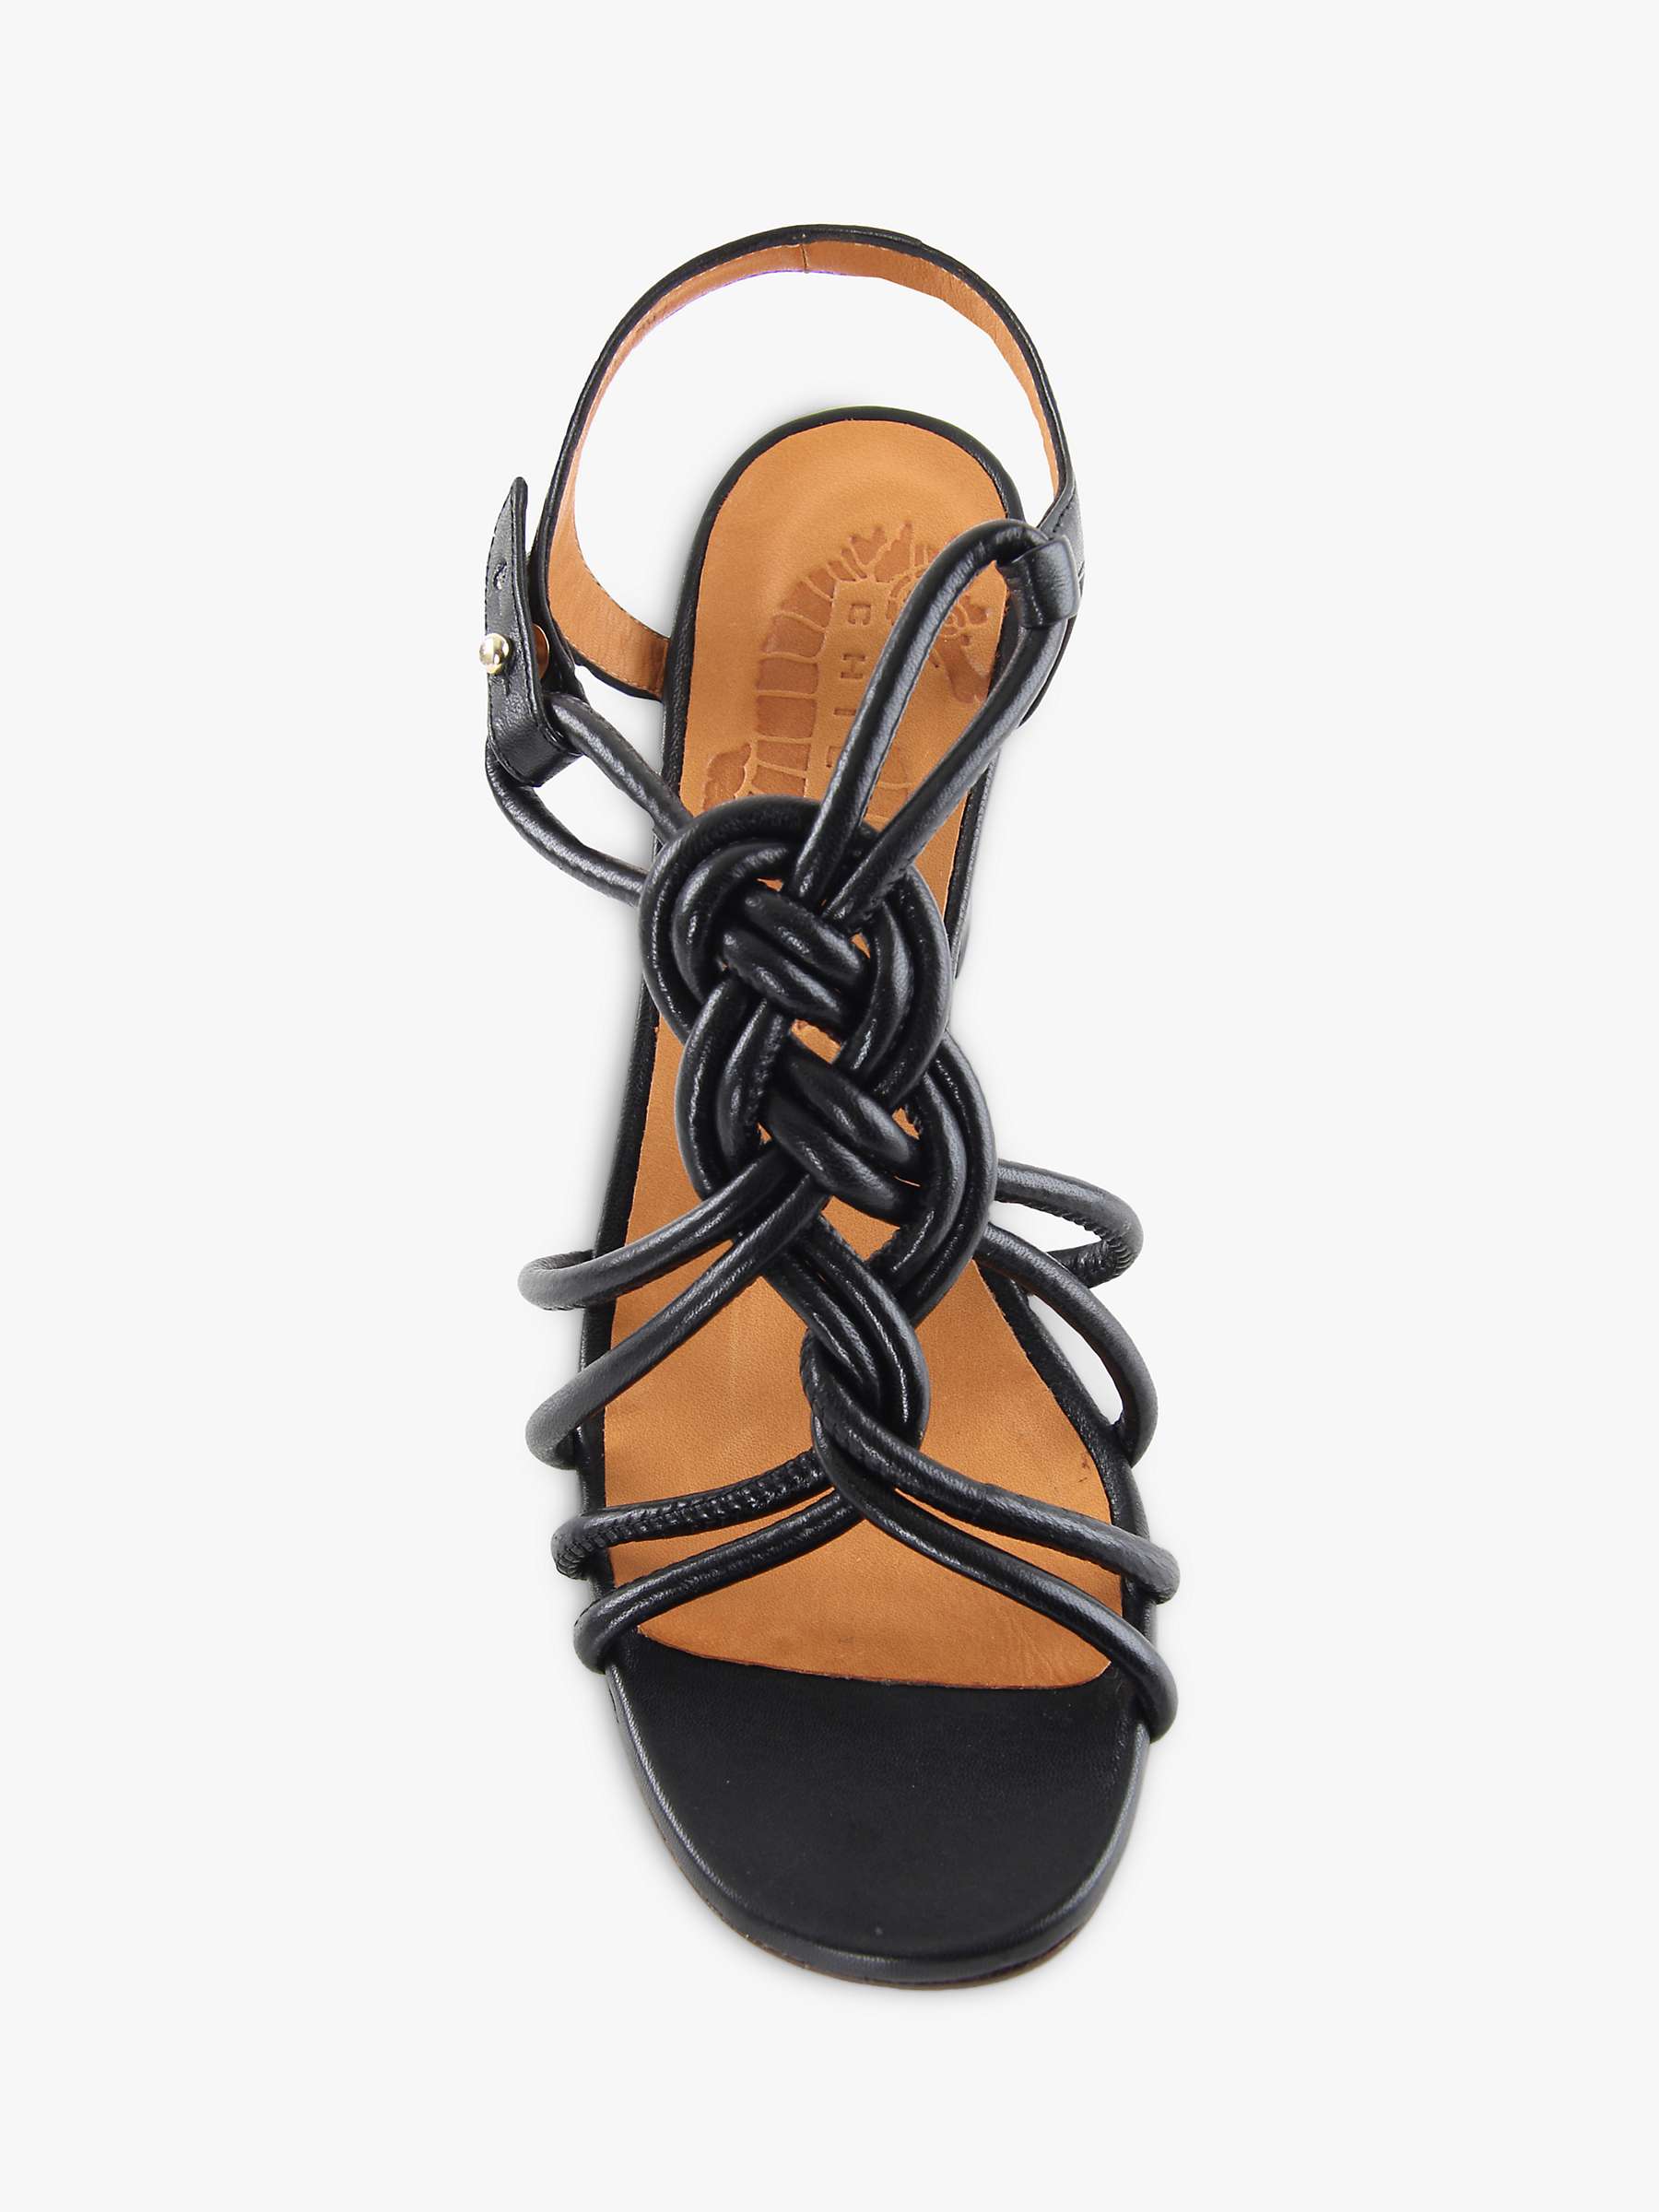 Buy Chie Mihara Bane Heel Sandals, Black Online at johnlewis.com